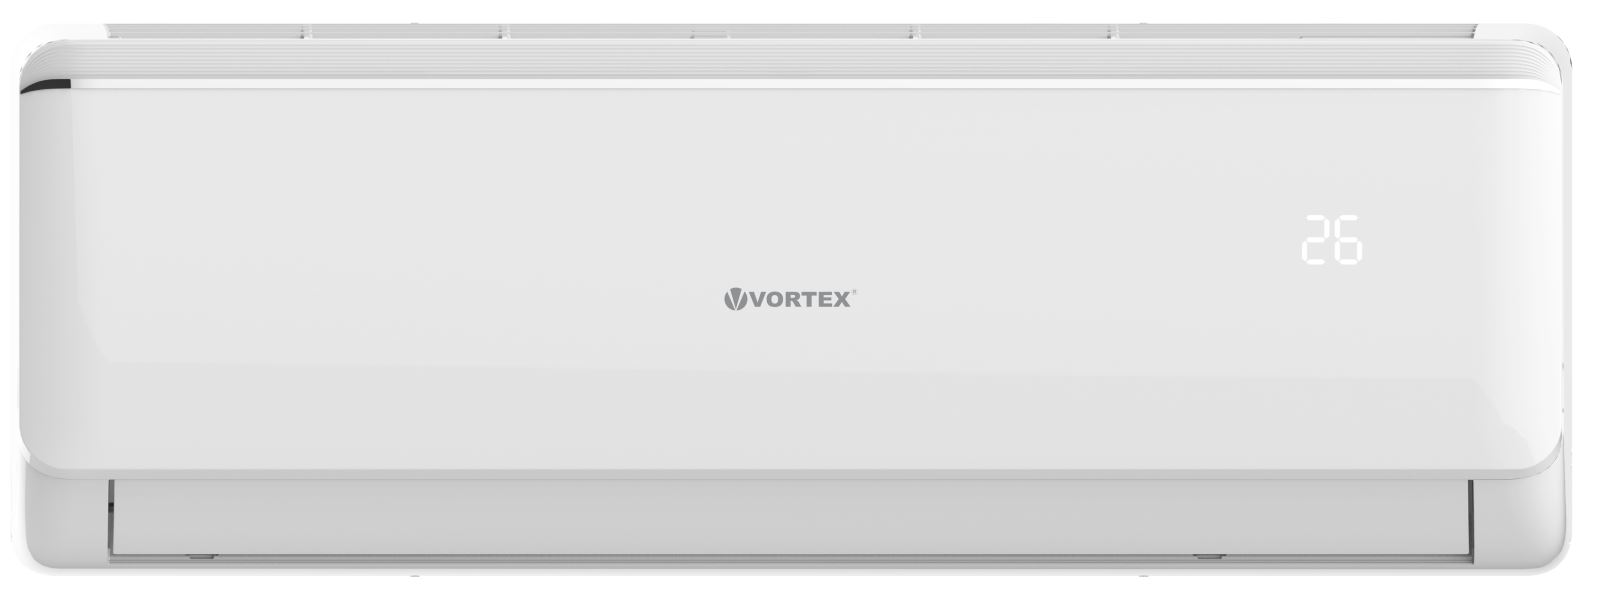 Aer conditionat Vortex VAI0920FFWR clasa A++